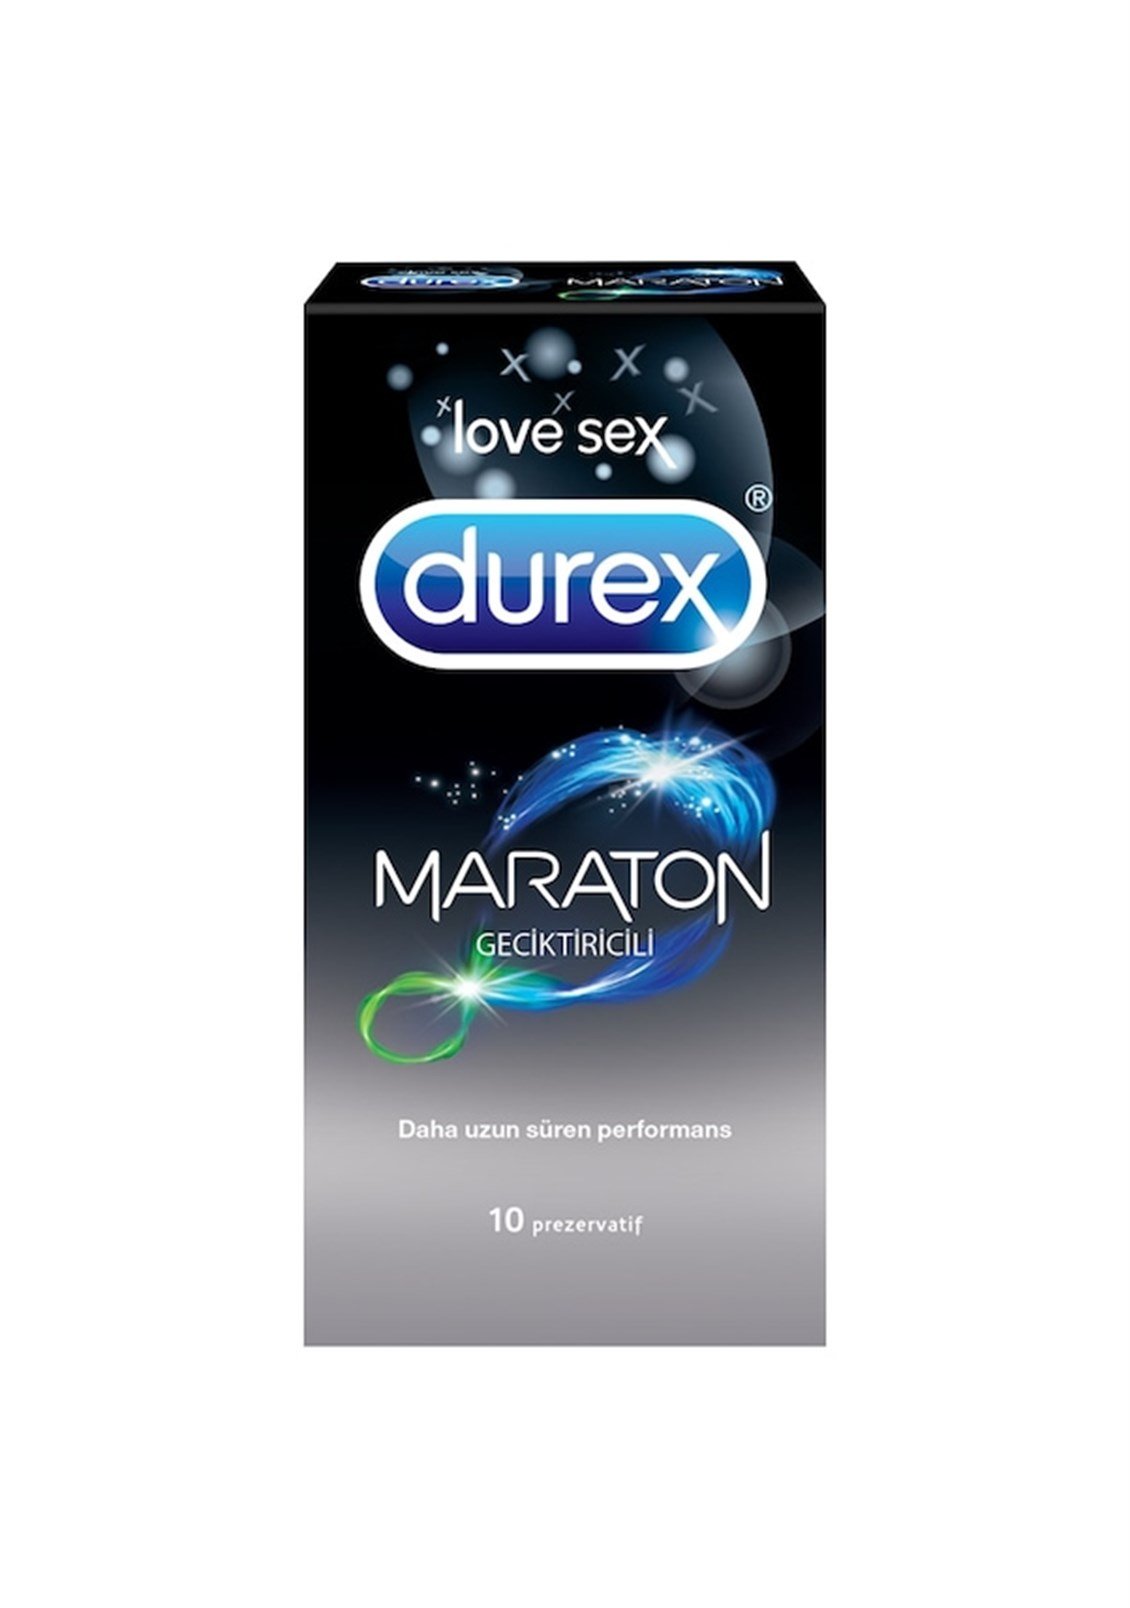 Durex Maraton Geciktiricili Prezervatif 10'Lu - Onur Market